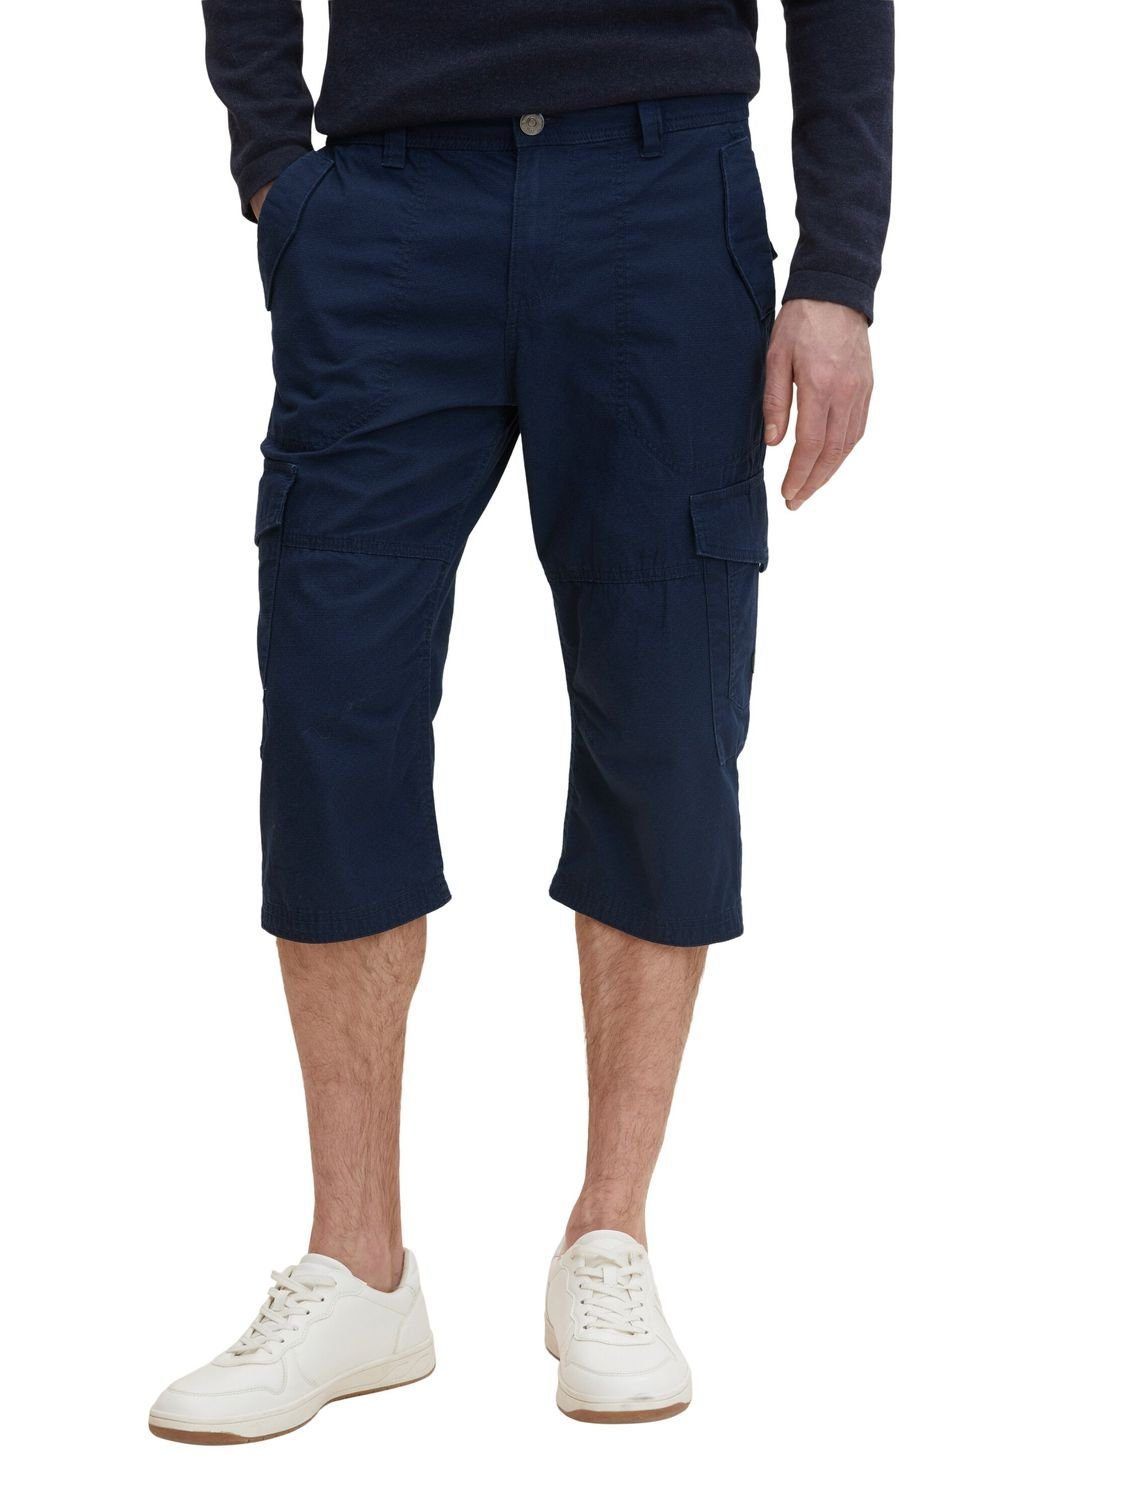 Shorts OVERKNEE TOM Minimal 29122 Baumwolle aus MAX Navy Design TAILOR